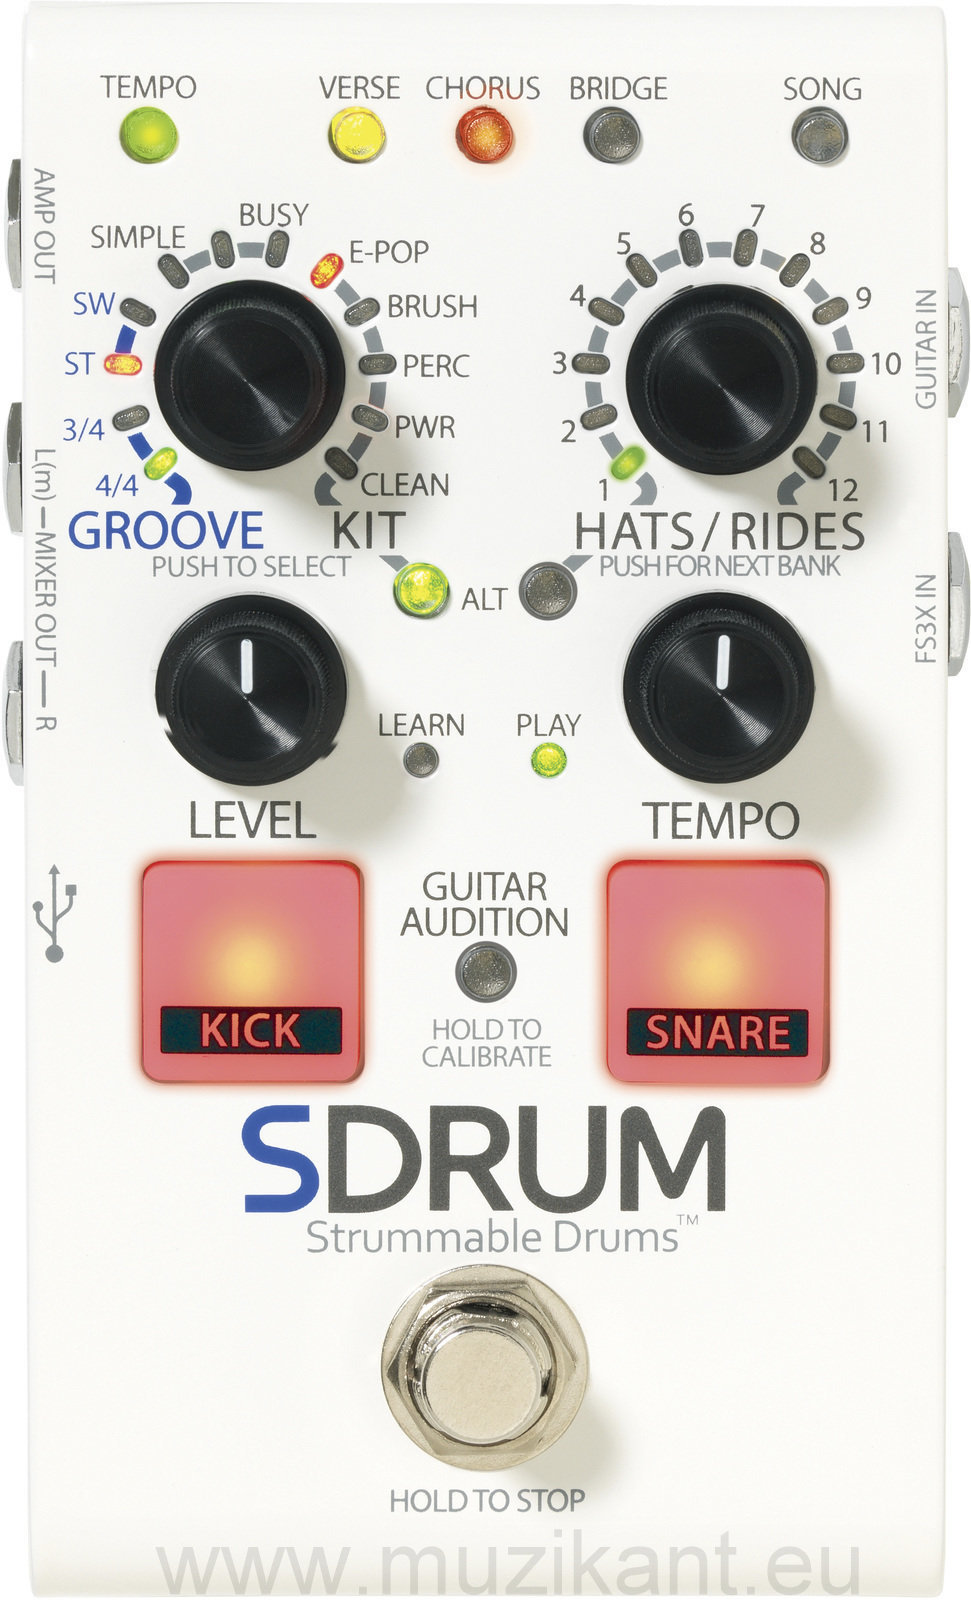 Digitech SDRUM - Strummable Drums